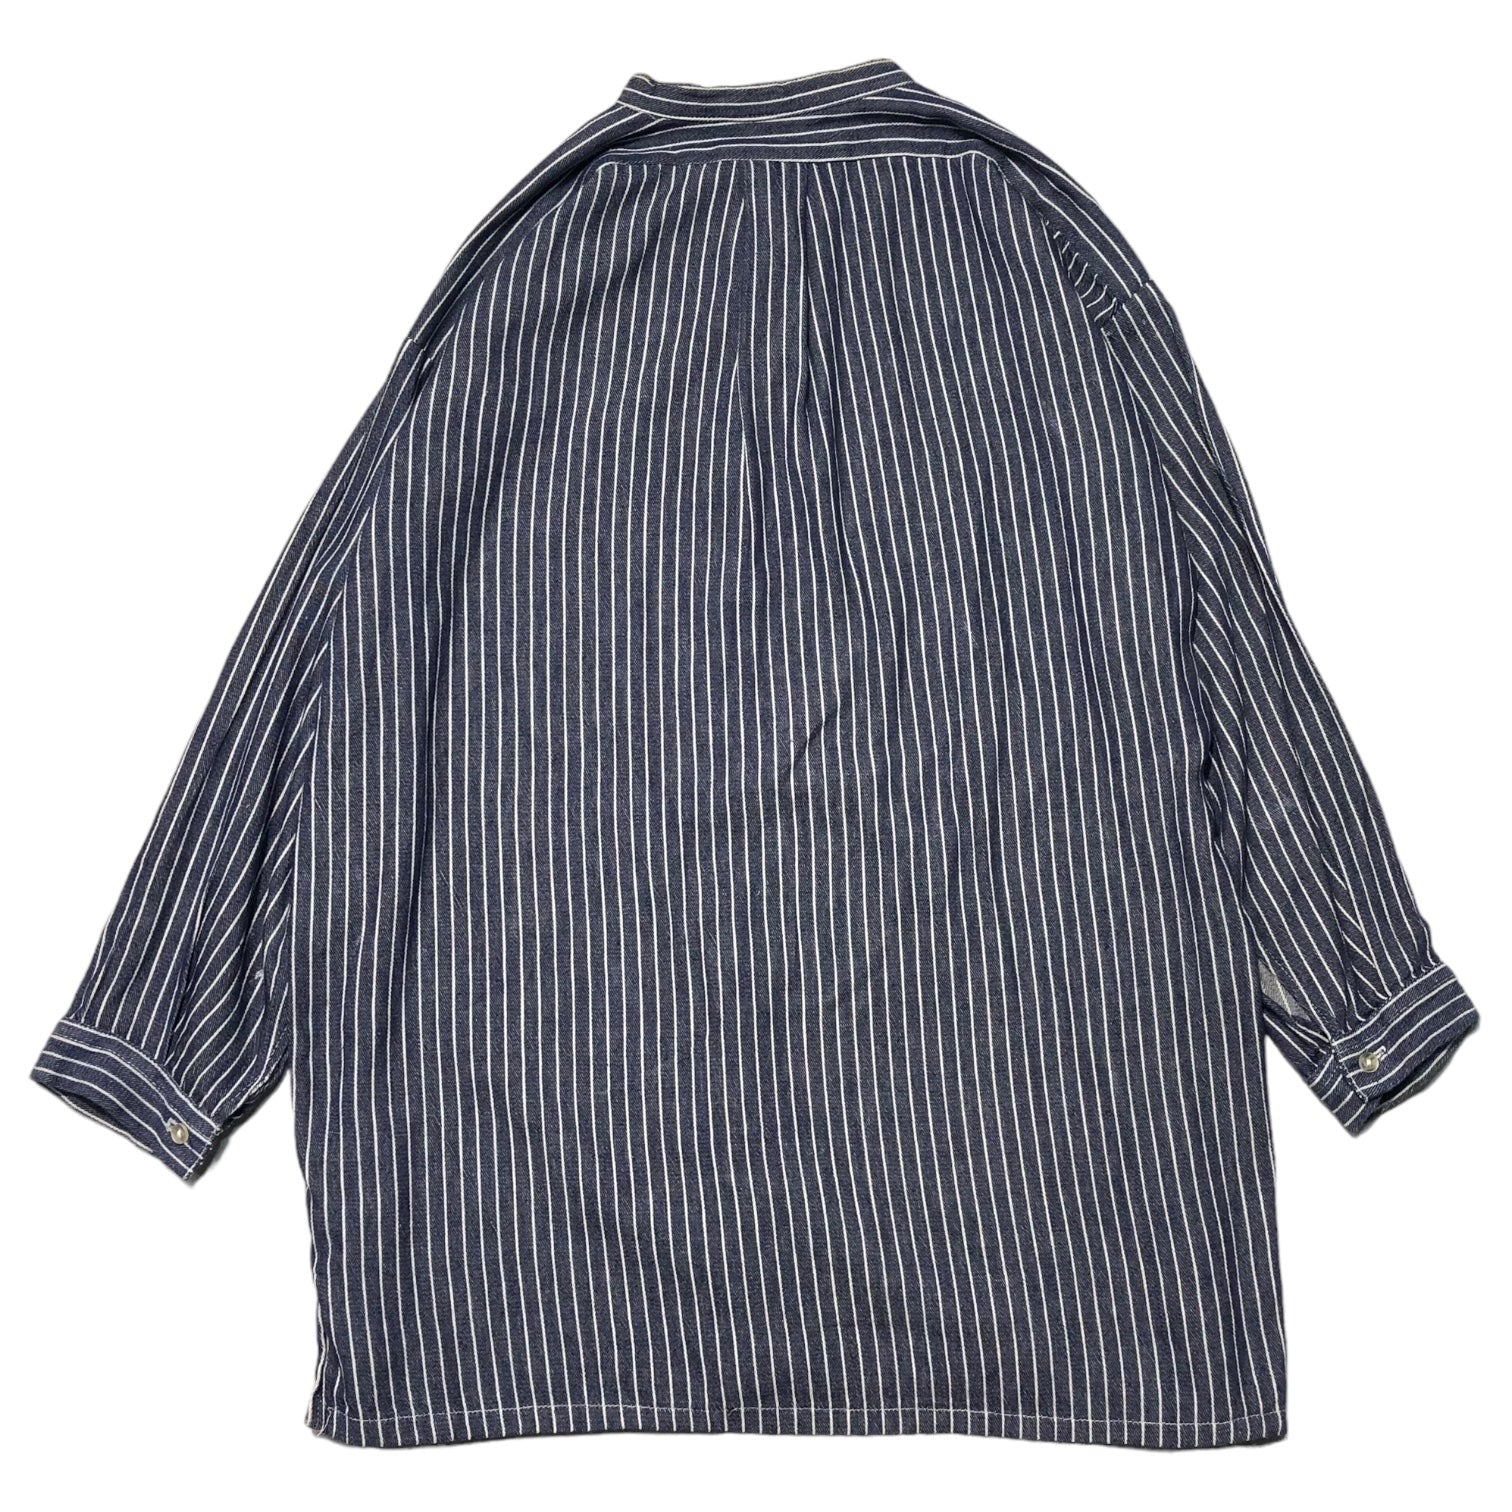 J.G.EISEL GMBH＆CO(アイゼル) 70's ~ 80's  german work cotton striped shirt ドイツ ワーク コットン ストライプ シャツ 42(XL程度) ネイビー